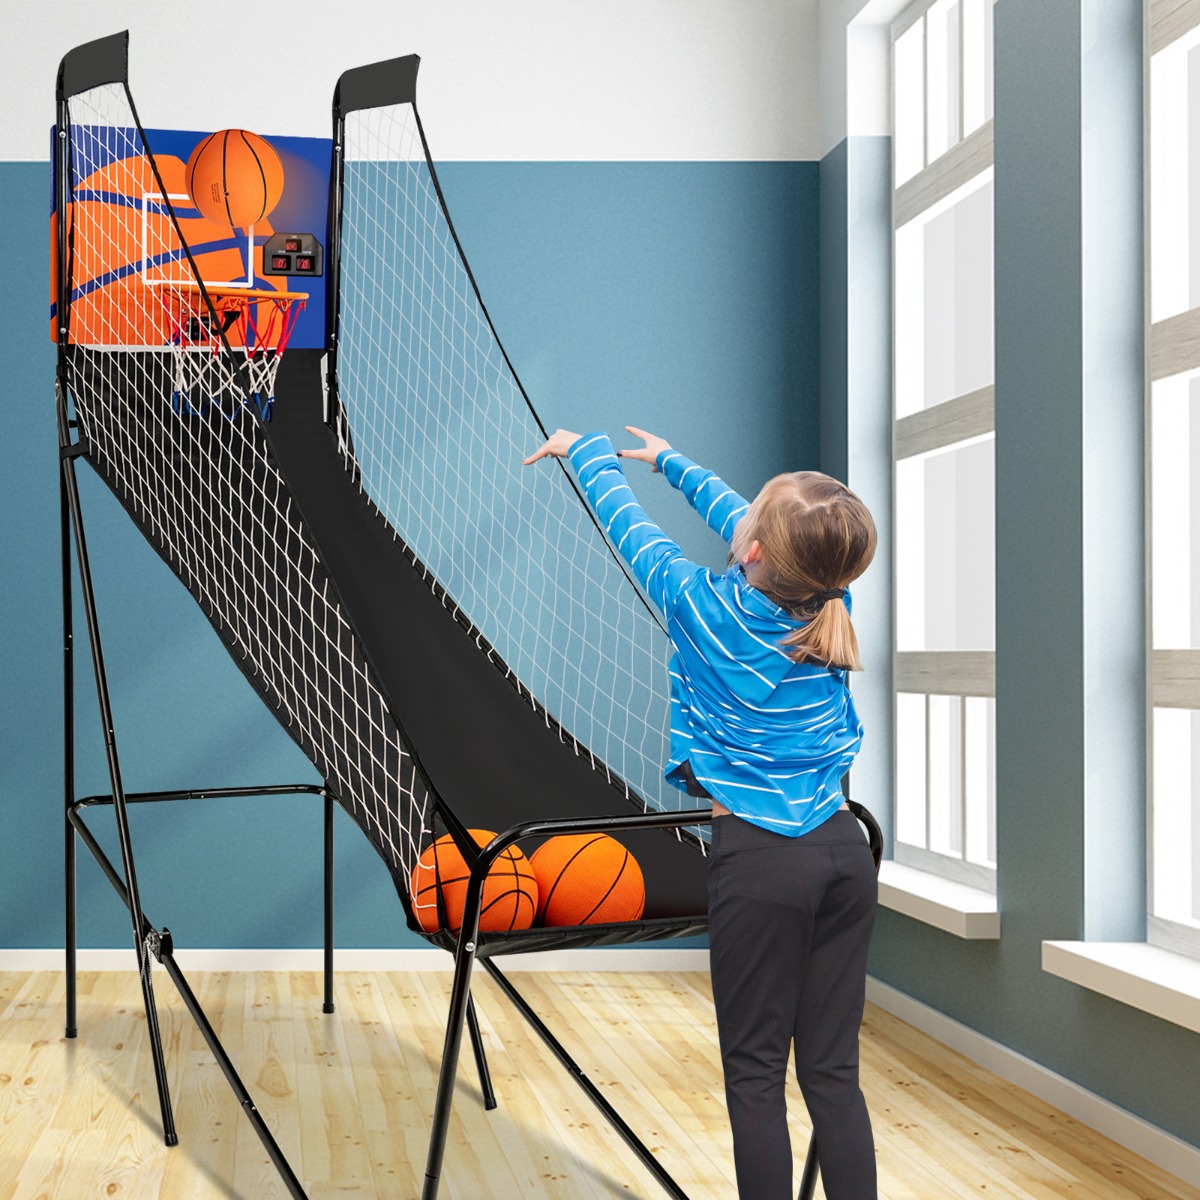 Portable Arcade Basketball Game Basketbalmachine voor kinderen 208 x 62 x 207 cm zwart